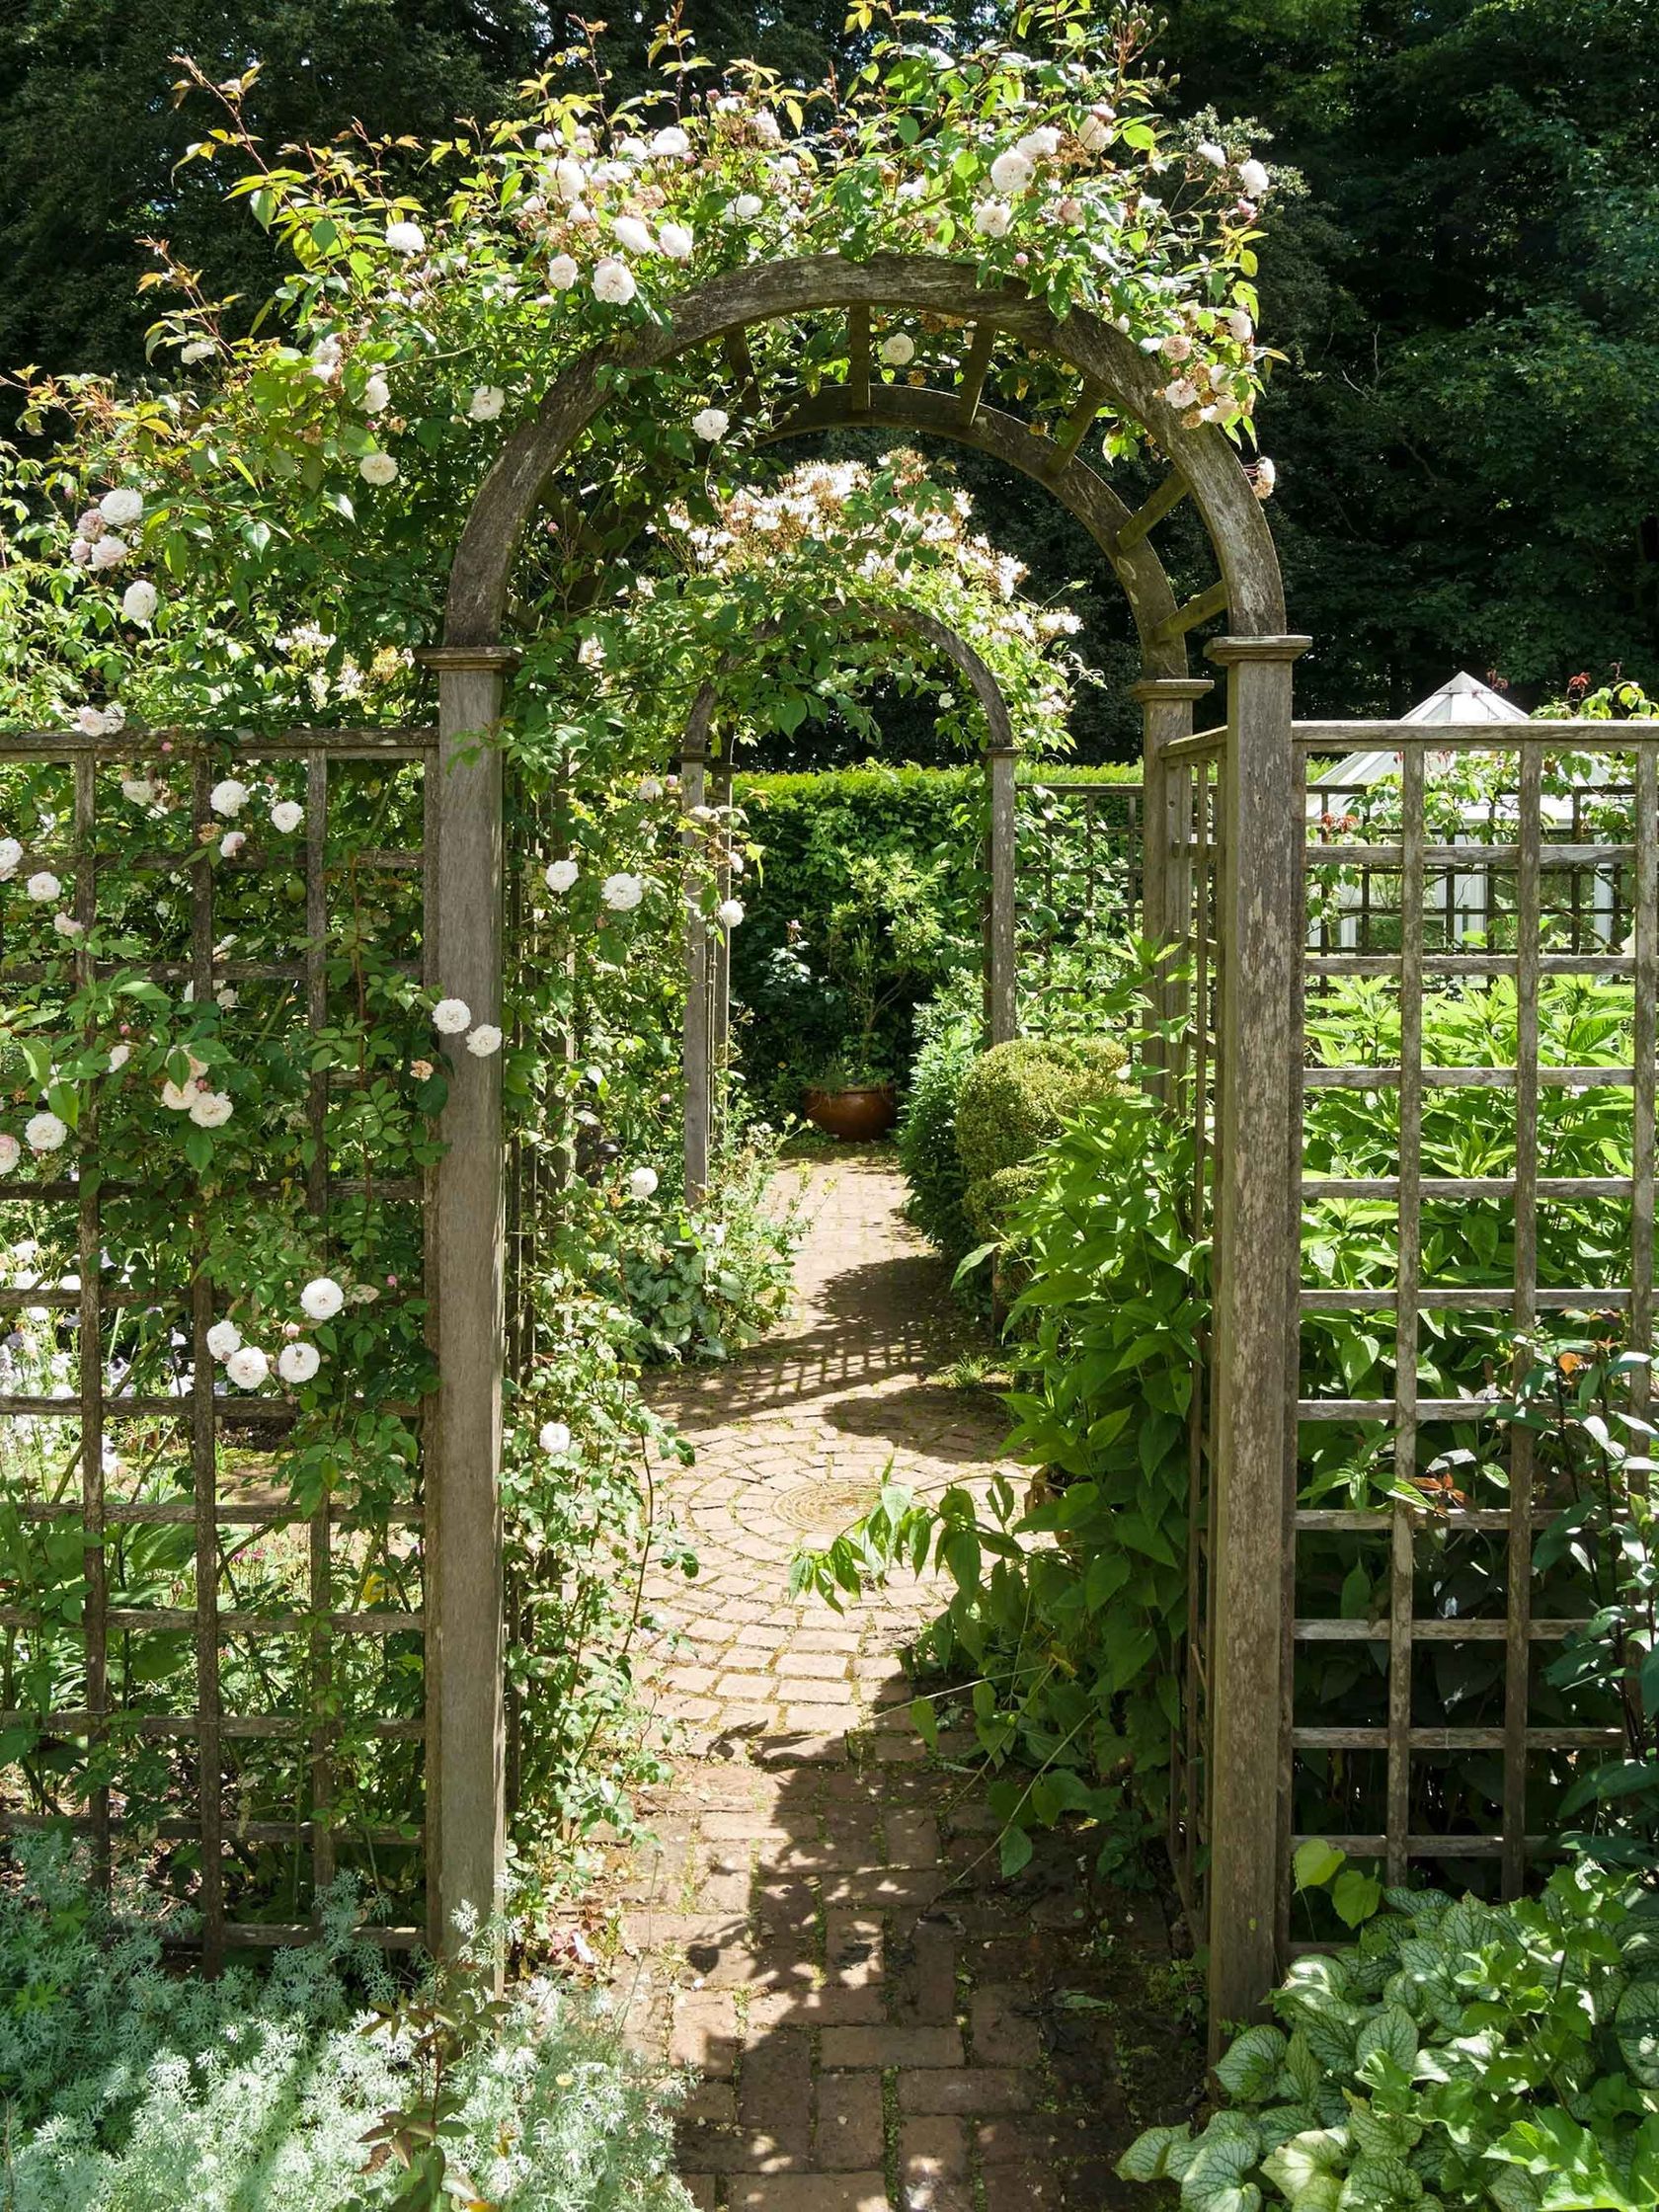 Romance Roleplay Plot Ideas : Trellis Ideas For Gardens: 15 Chic ...